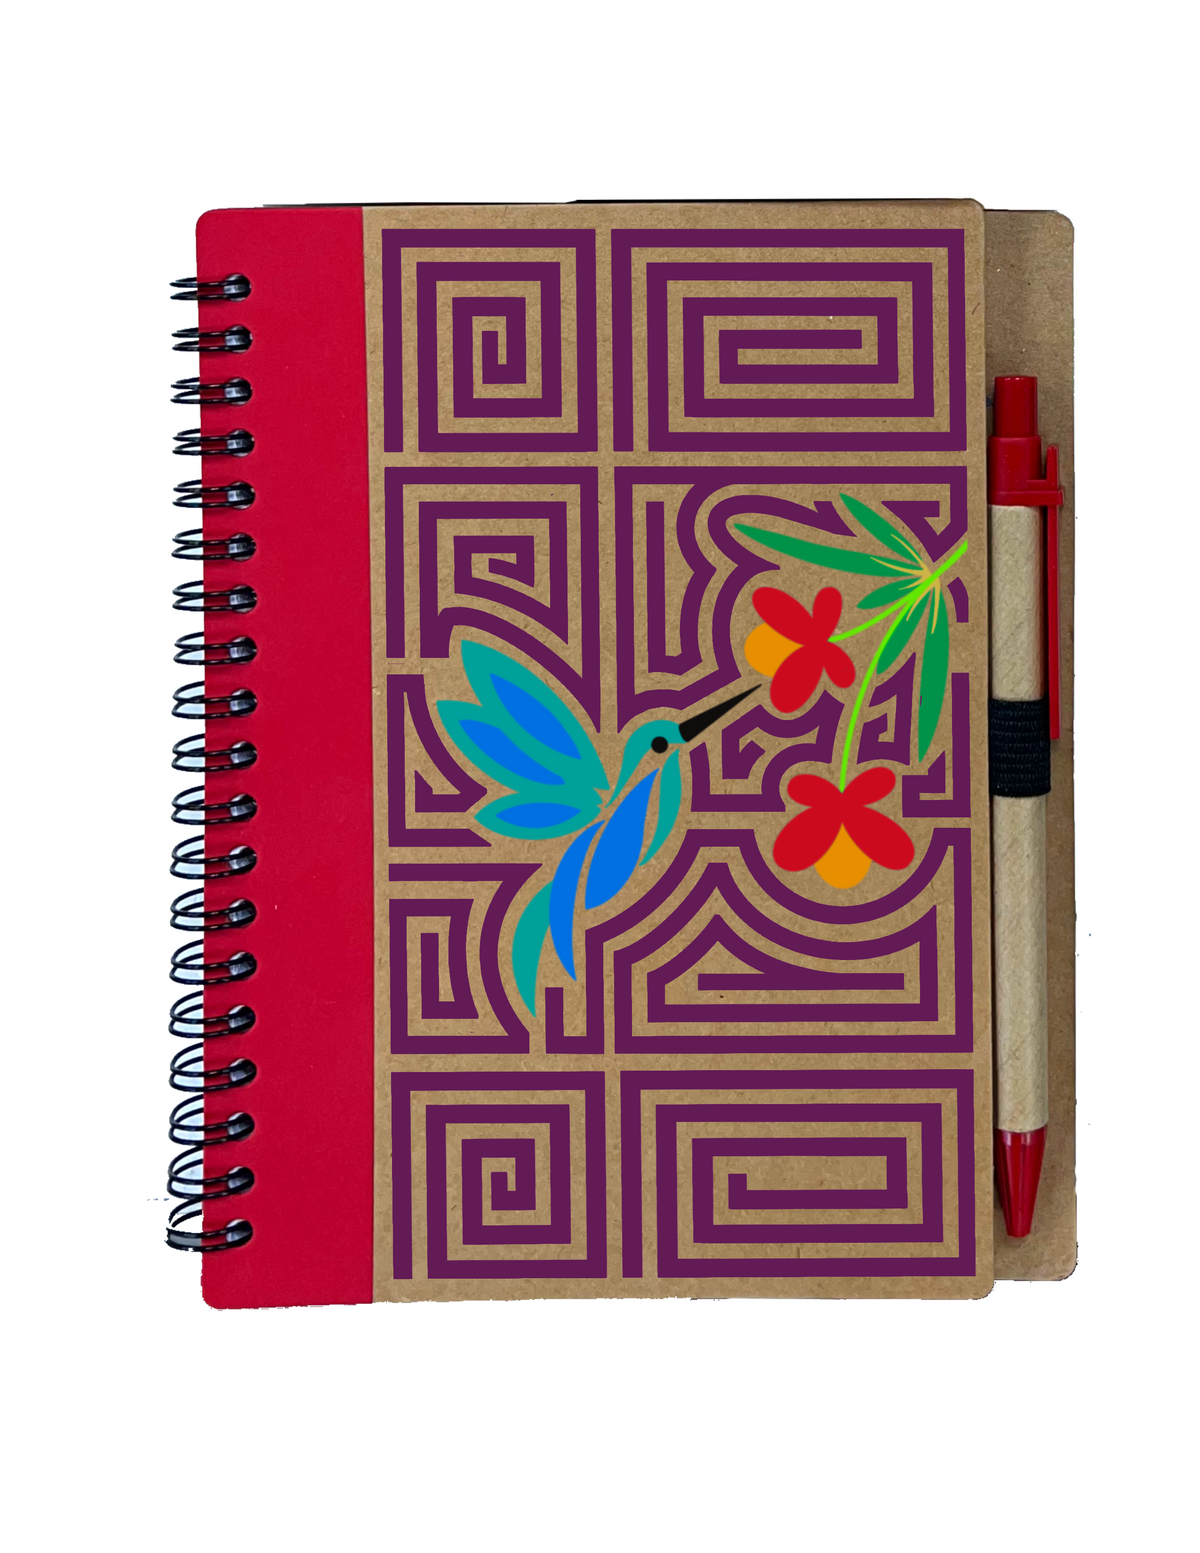 Hummingbird datebook